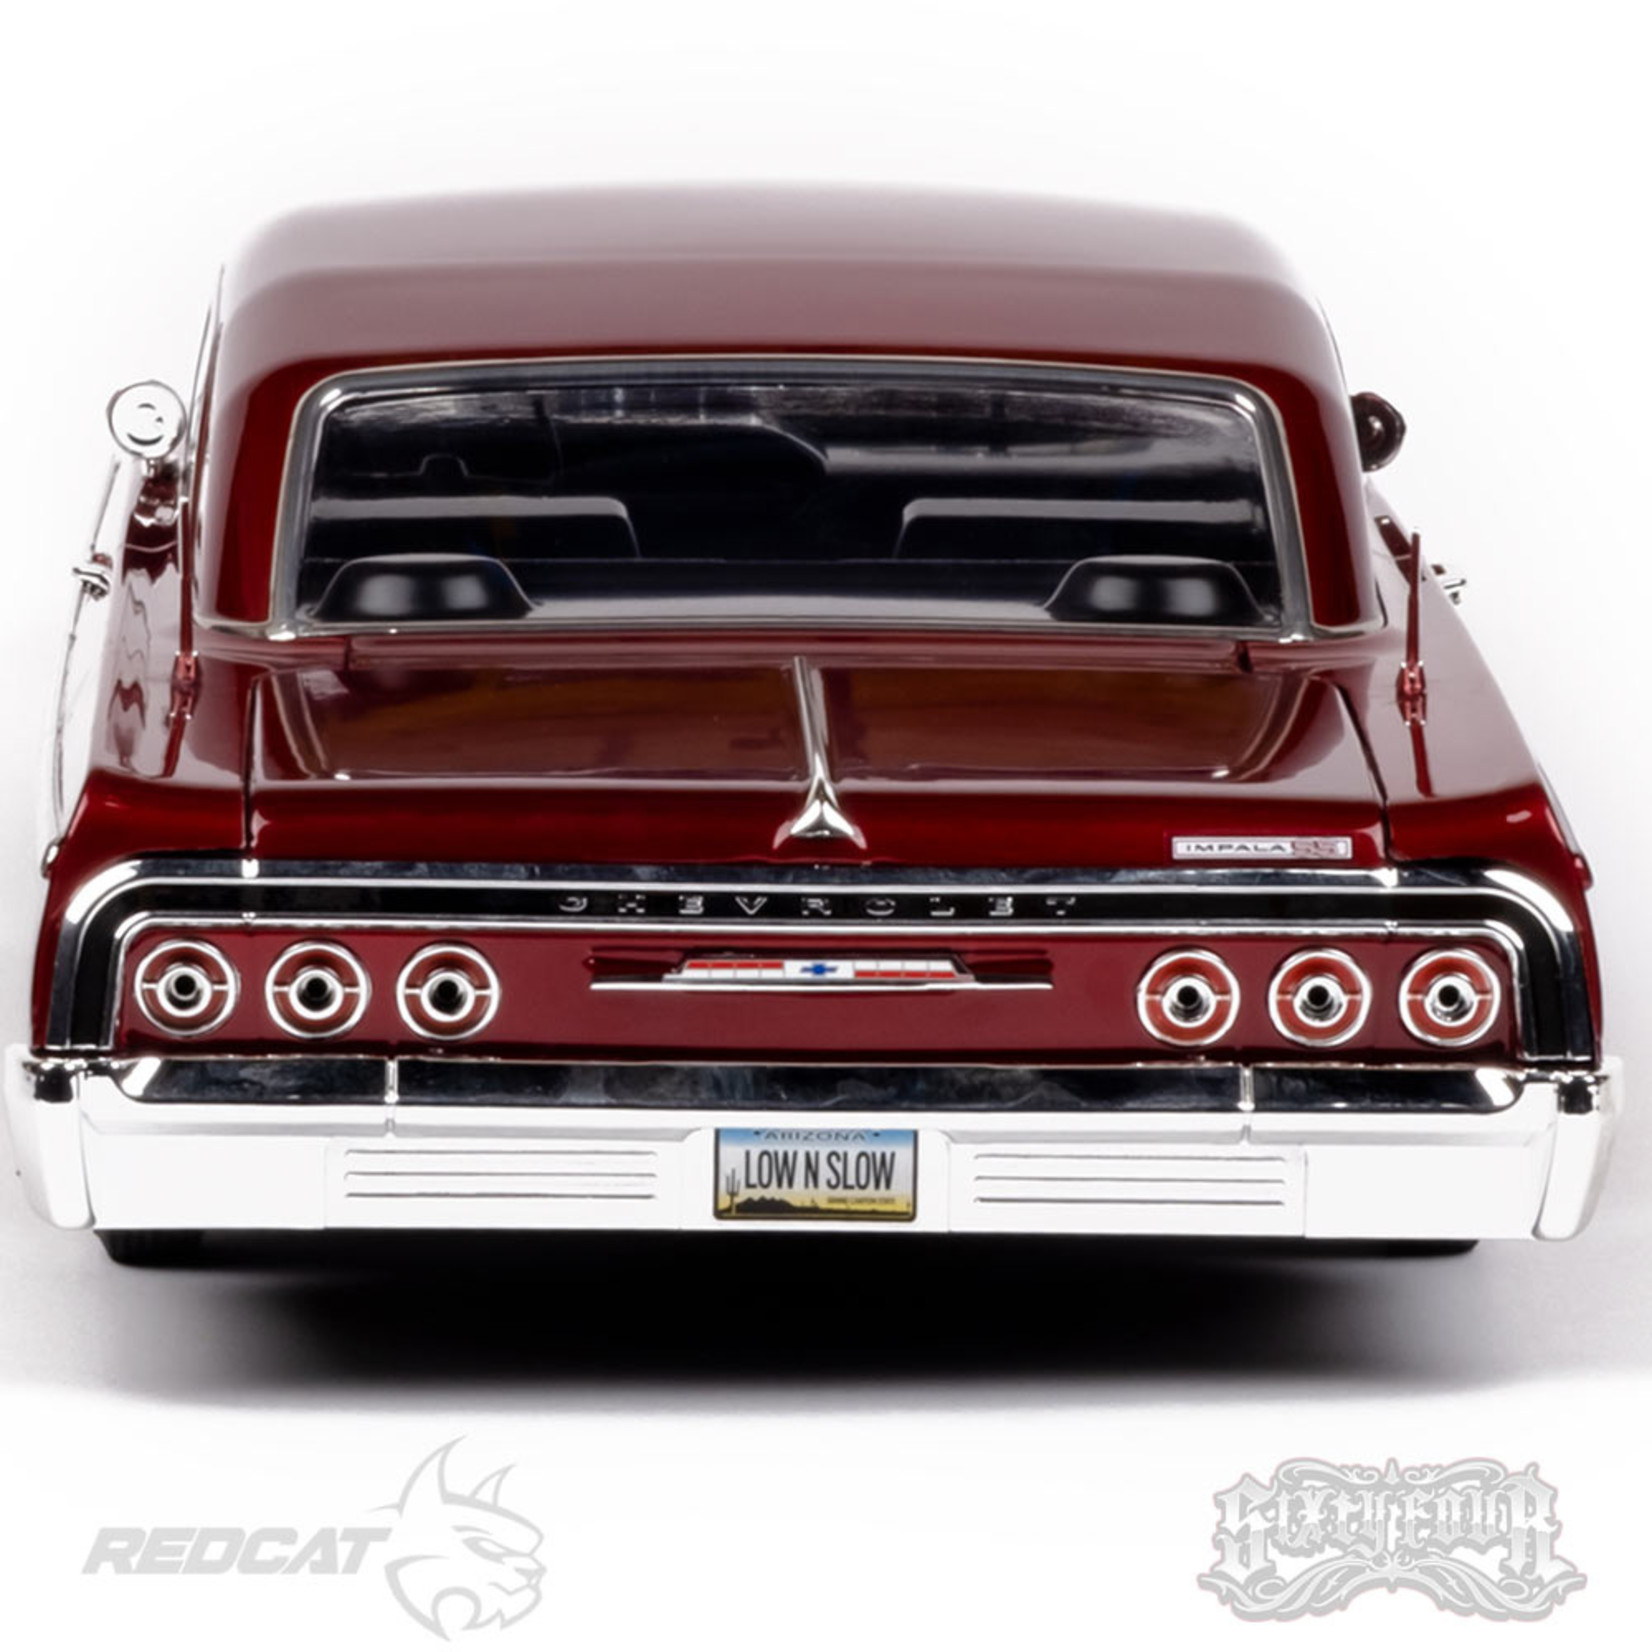 Redcat Racing RER13525 Redcat SixtyFour RC Car - 1:10 1964 Chevrolet Impala Hopping Lowrider